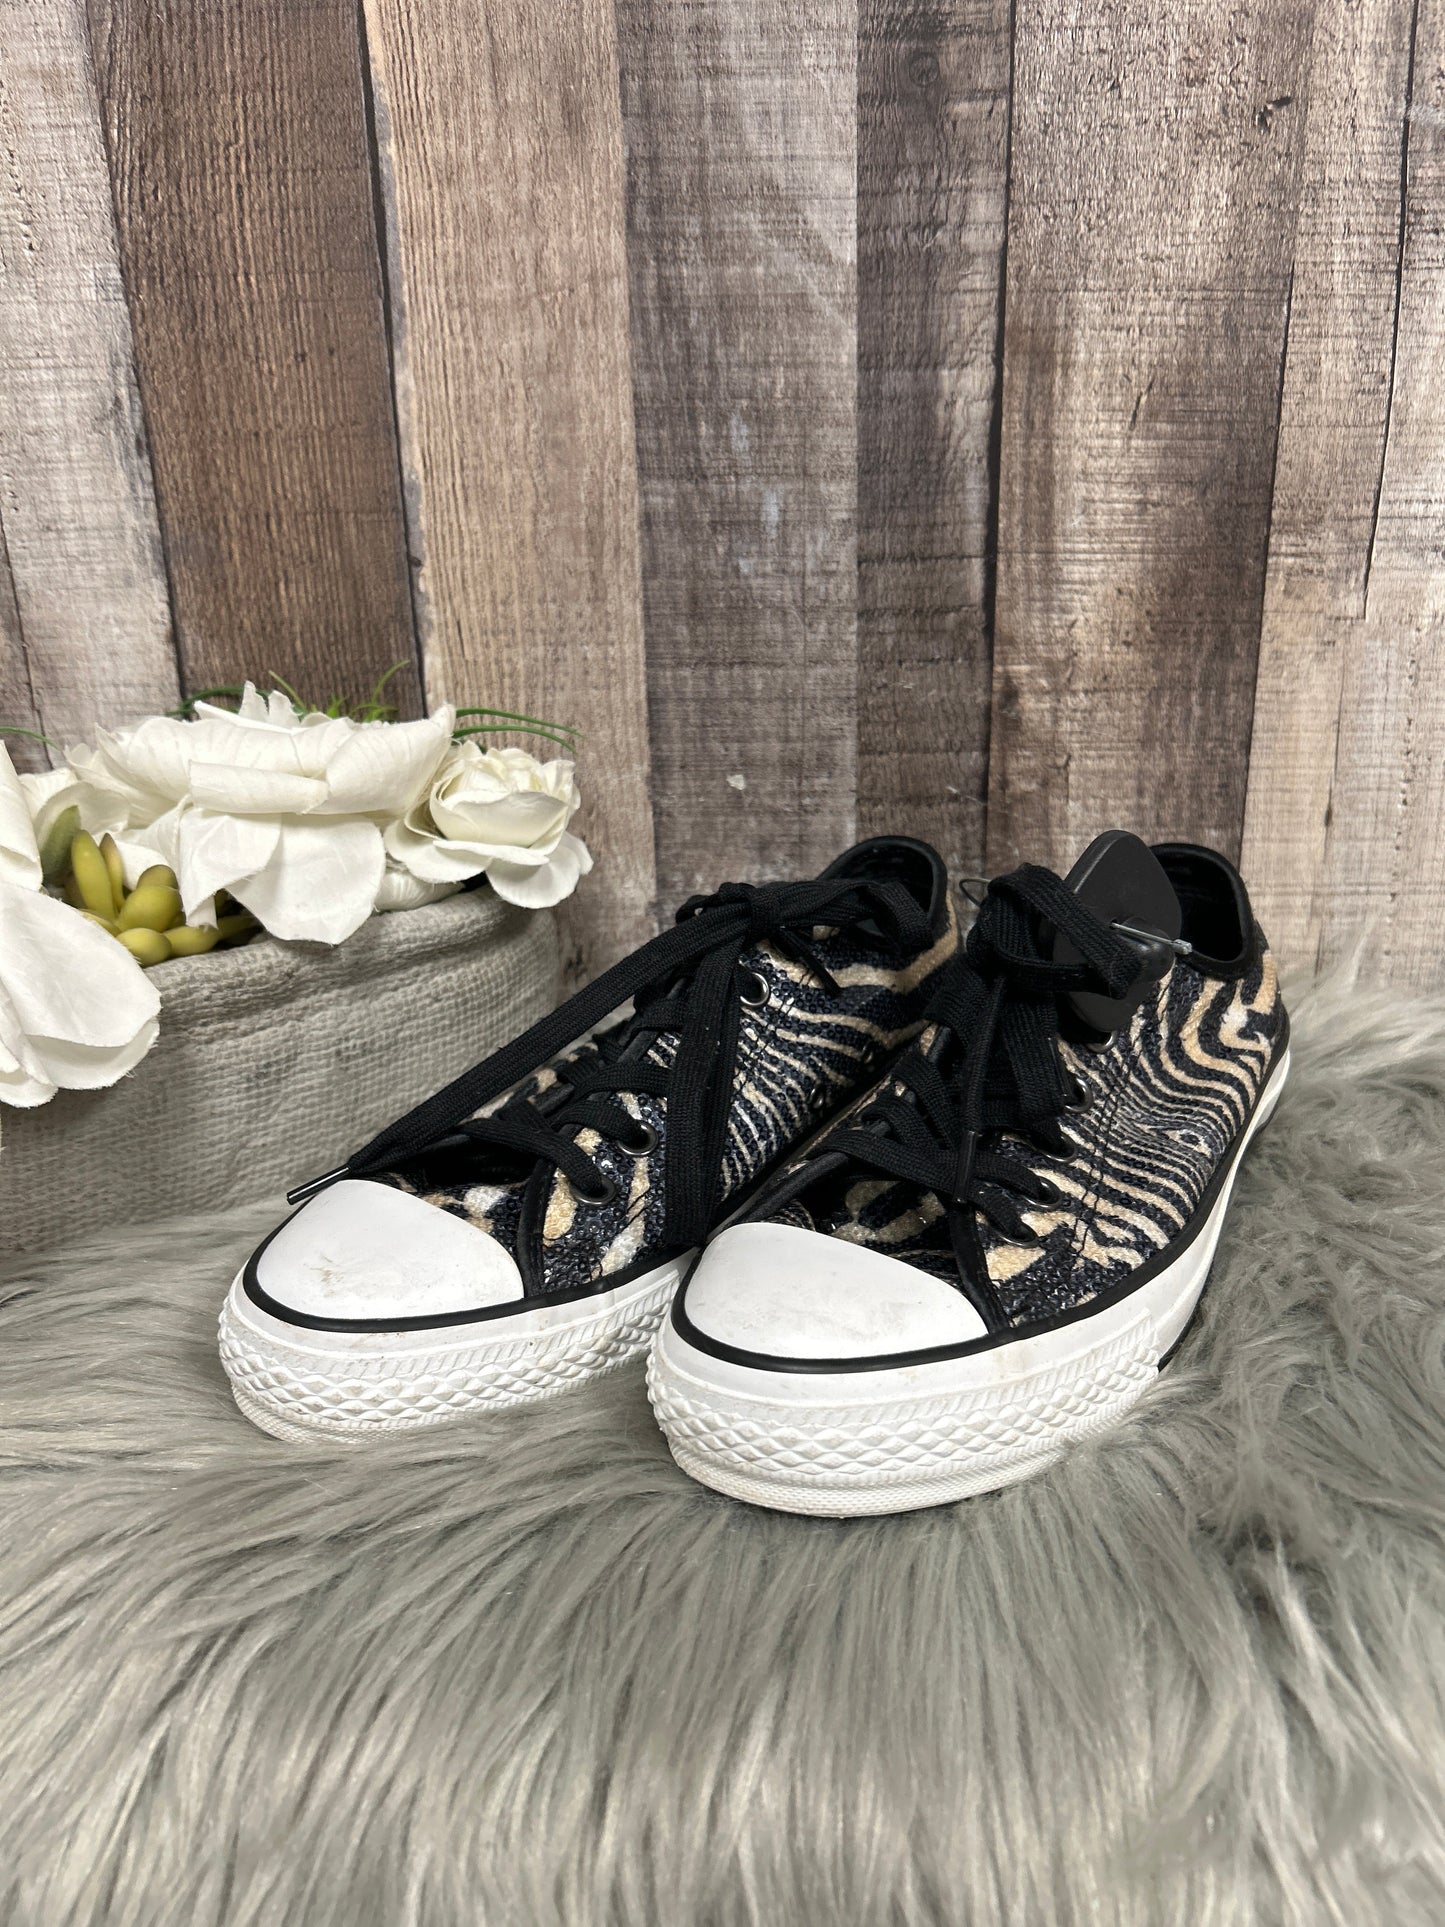 Zebra Print Shoes Sneakers Converse, Size 8